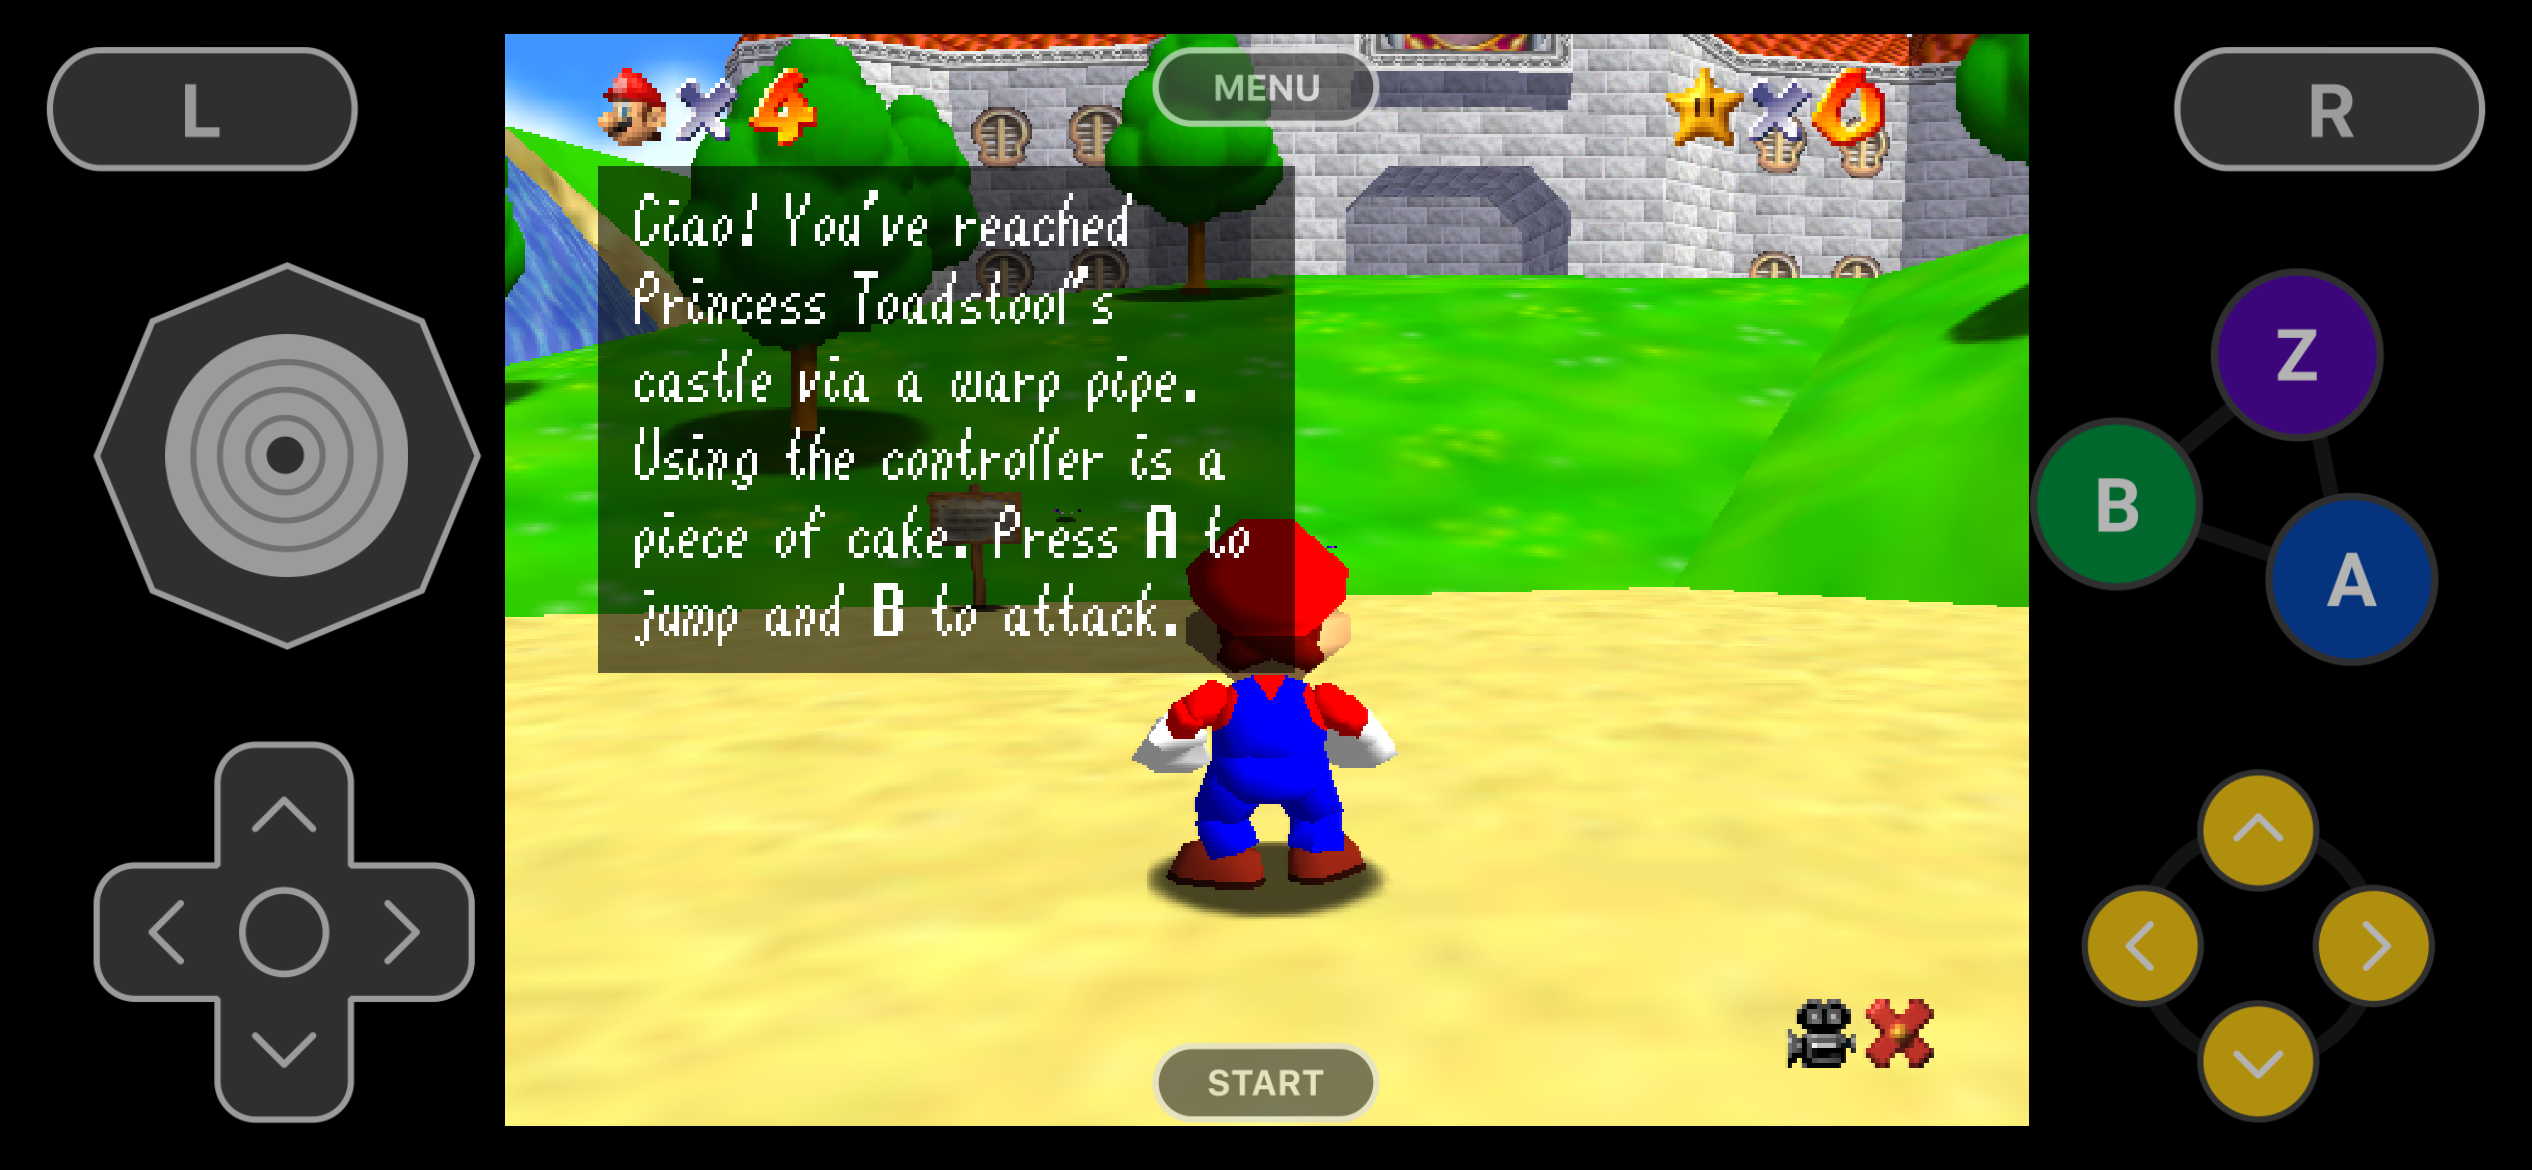 Super Mario 64 در آیفون با دلتا.